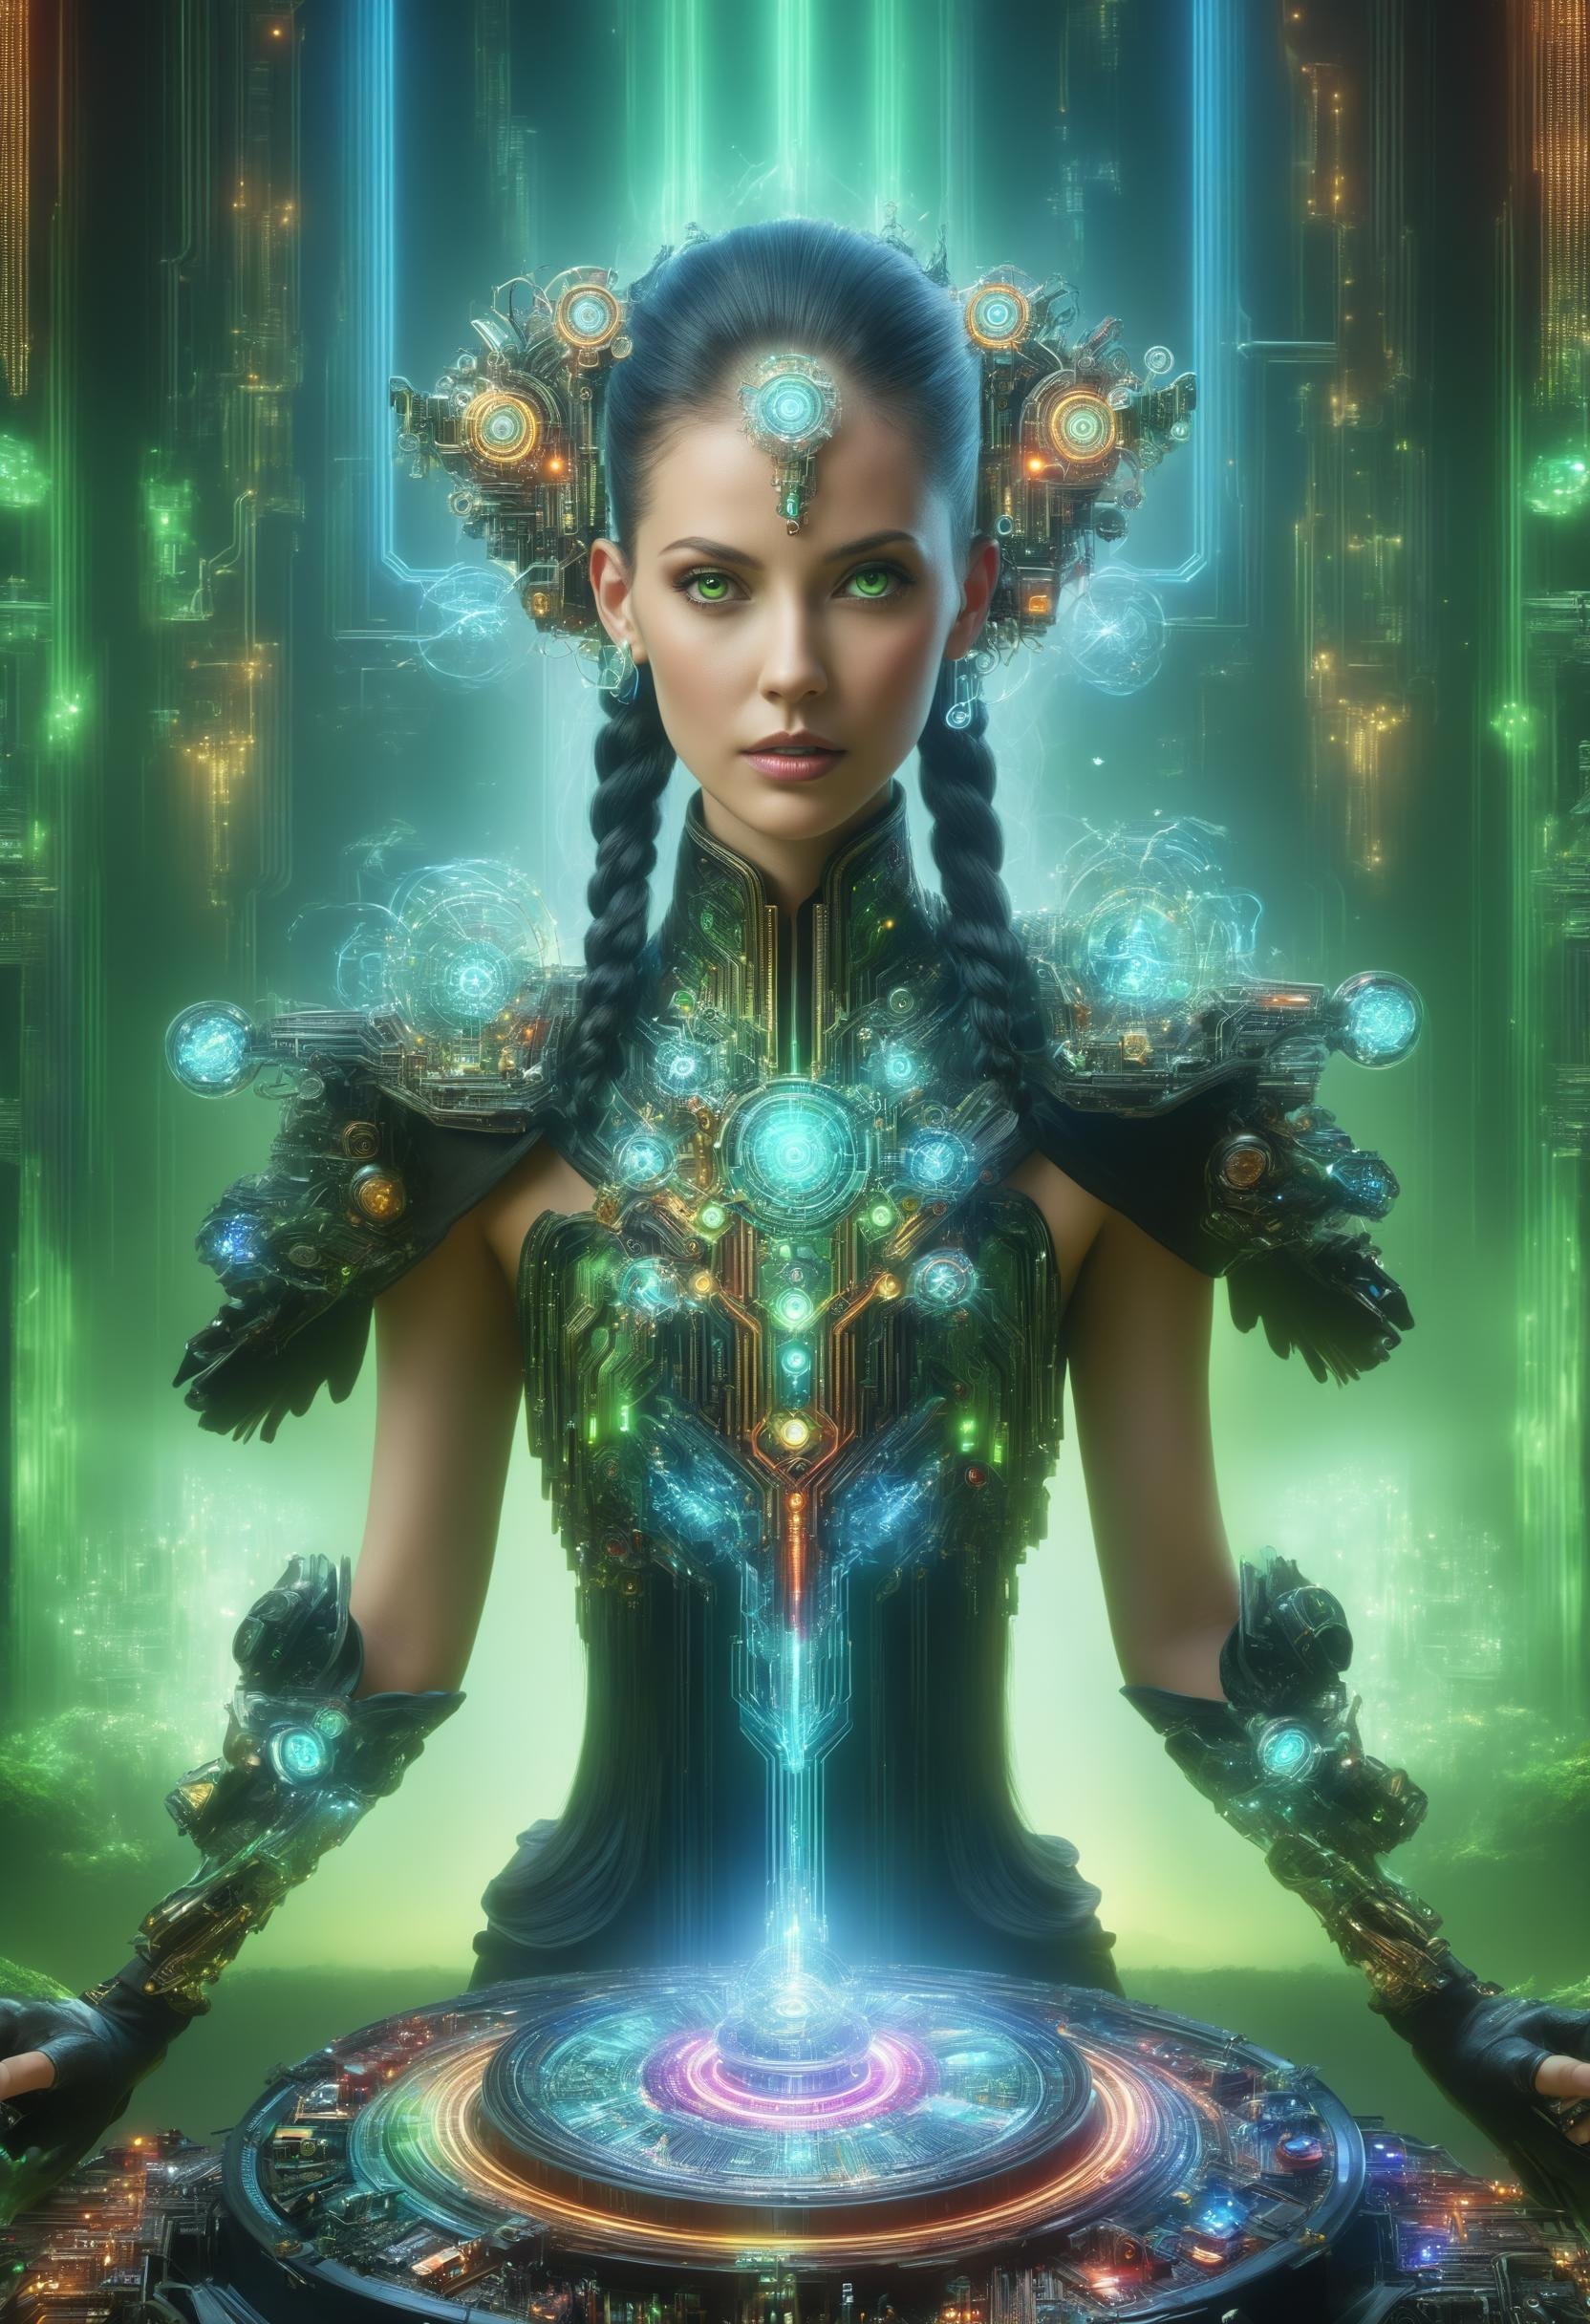 DonMQu4n7umZ3r0XL female tetsucabra, enchanter, faerie bow, steampunk city, aurora,jungle,trogloxene,quantum tech, futuristic,circuit board,<lora:DonMQu4n7umZ3r0XL-000006:0.8>, 